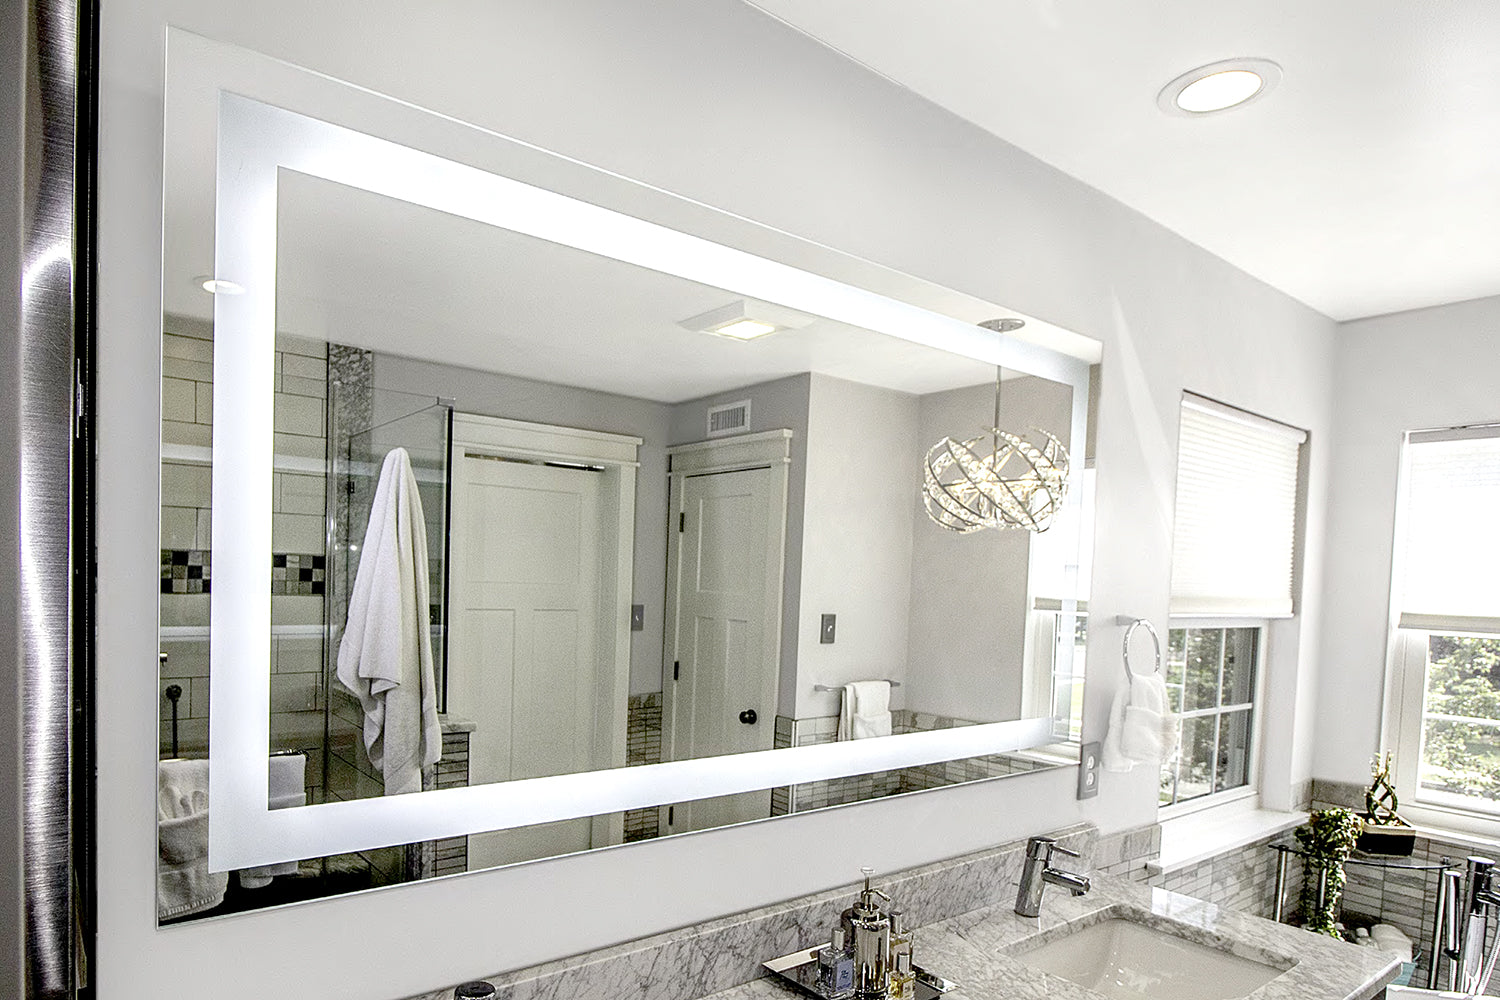 front-lighted led bathroom vanity mirror: 72" x 36" - rectangular